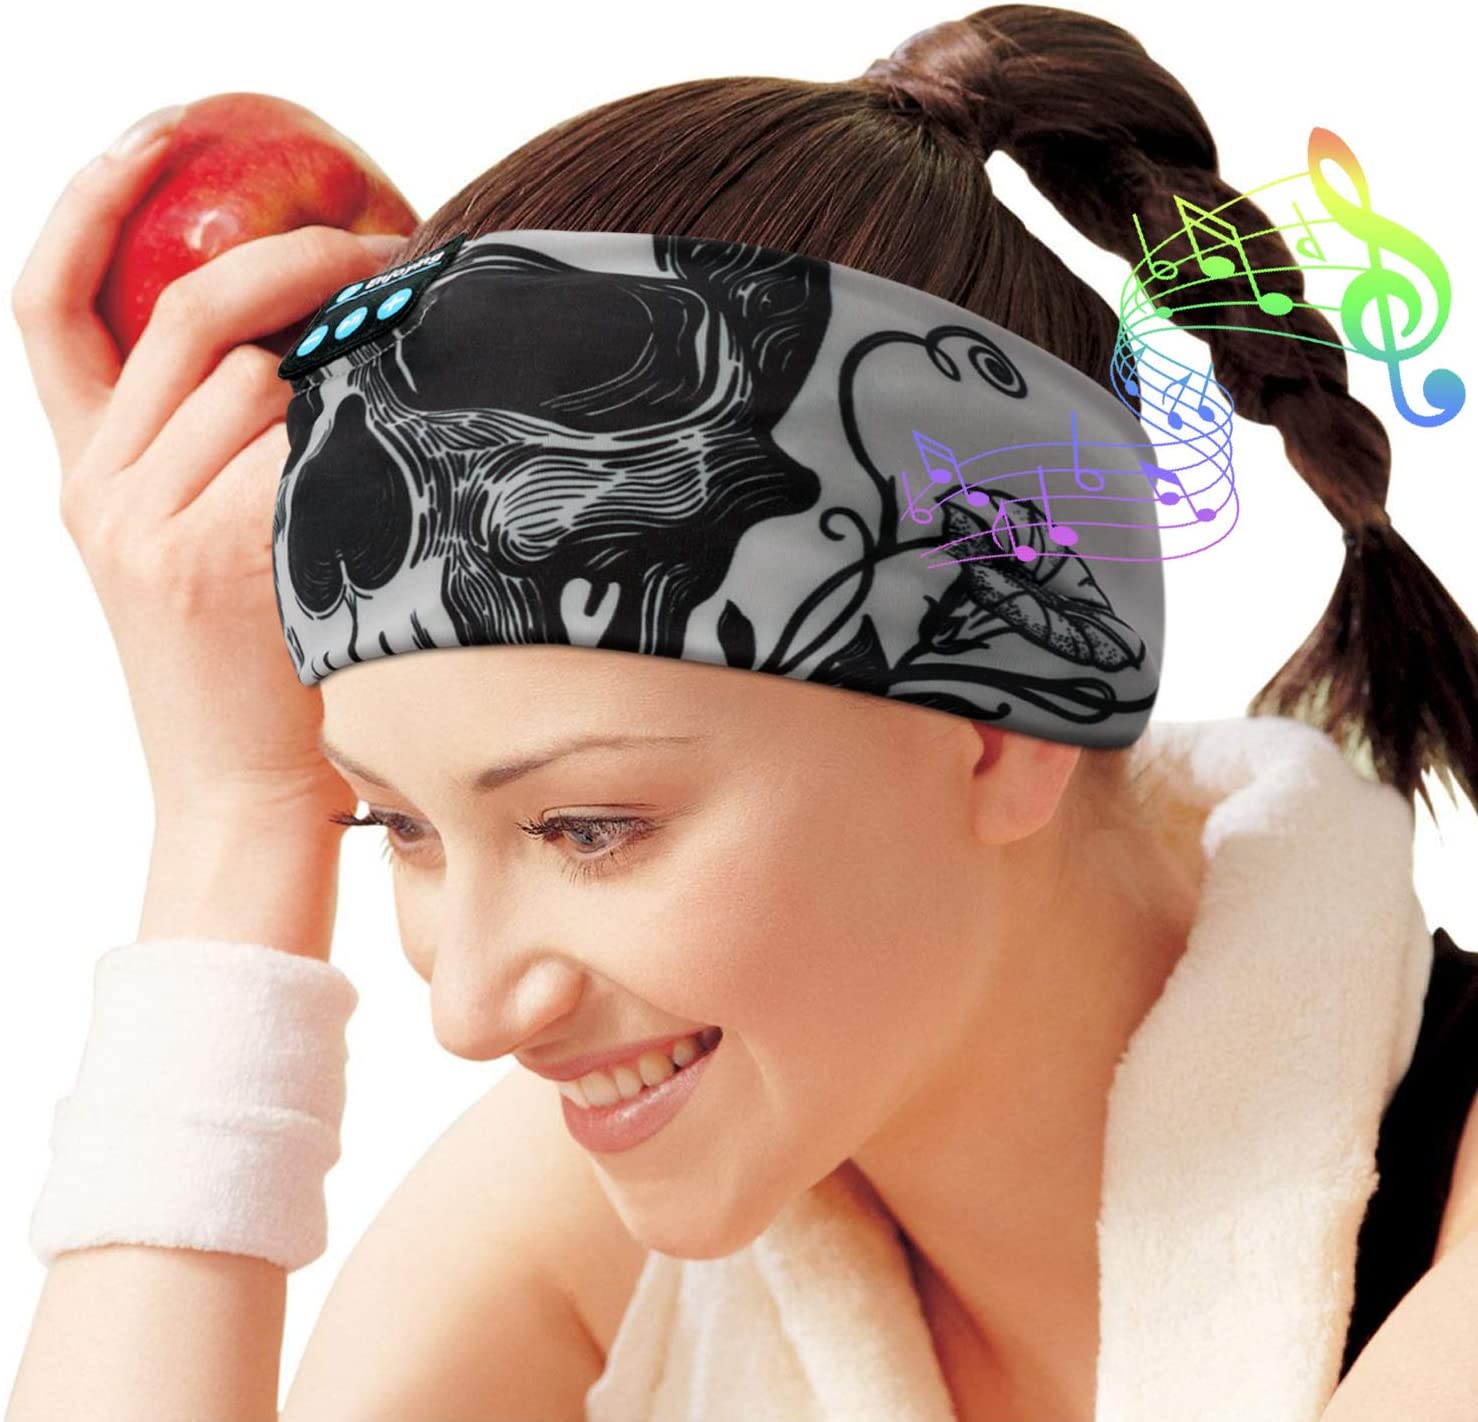 Sleep Headphones Bluetooth Headband, Wireless Sleeping Headphones Music Sport Headbands, Long Time Play Sleeping Headsets Built-in Thin Speakers, Skulls Design for Sleeping Running YOG